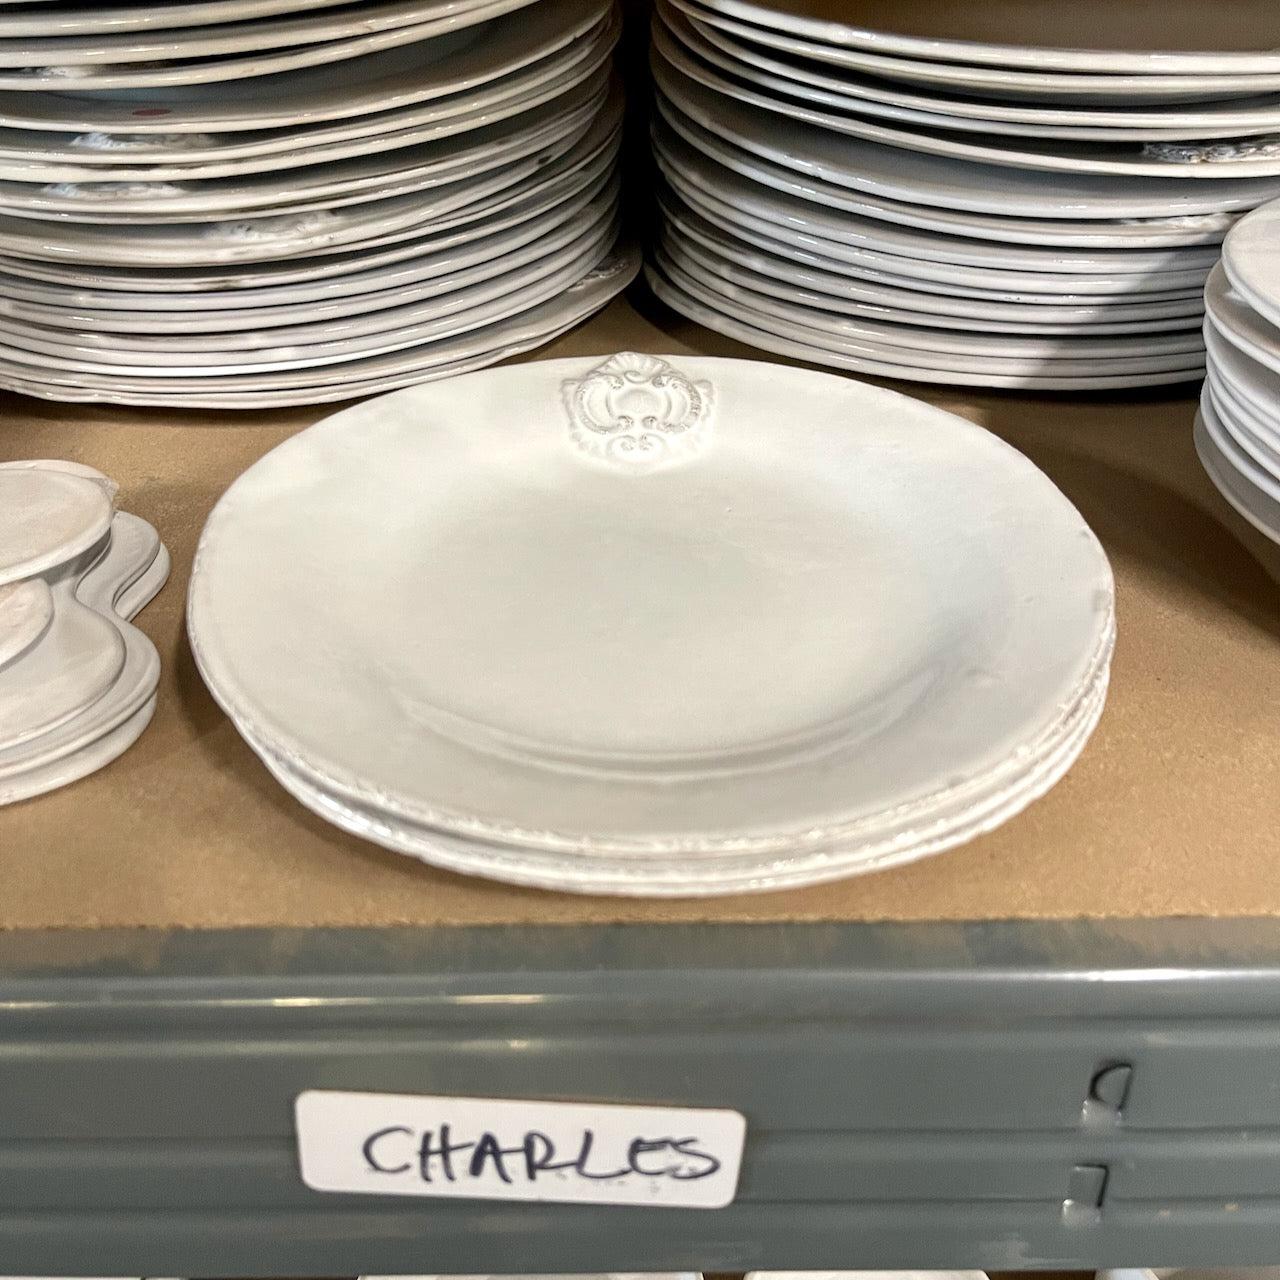 4x Charles dessert plates